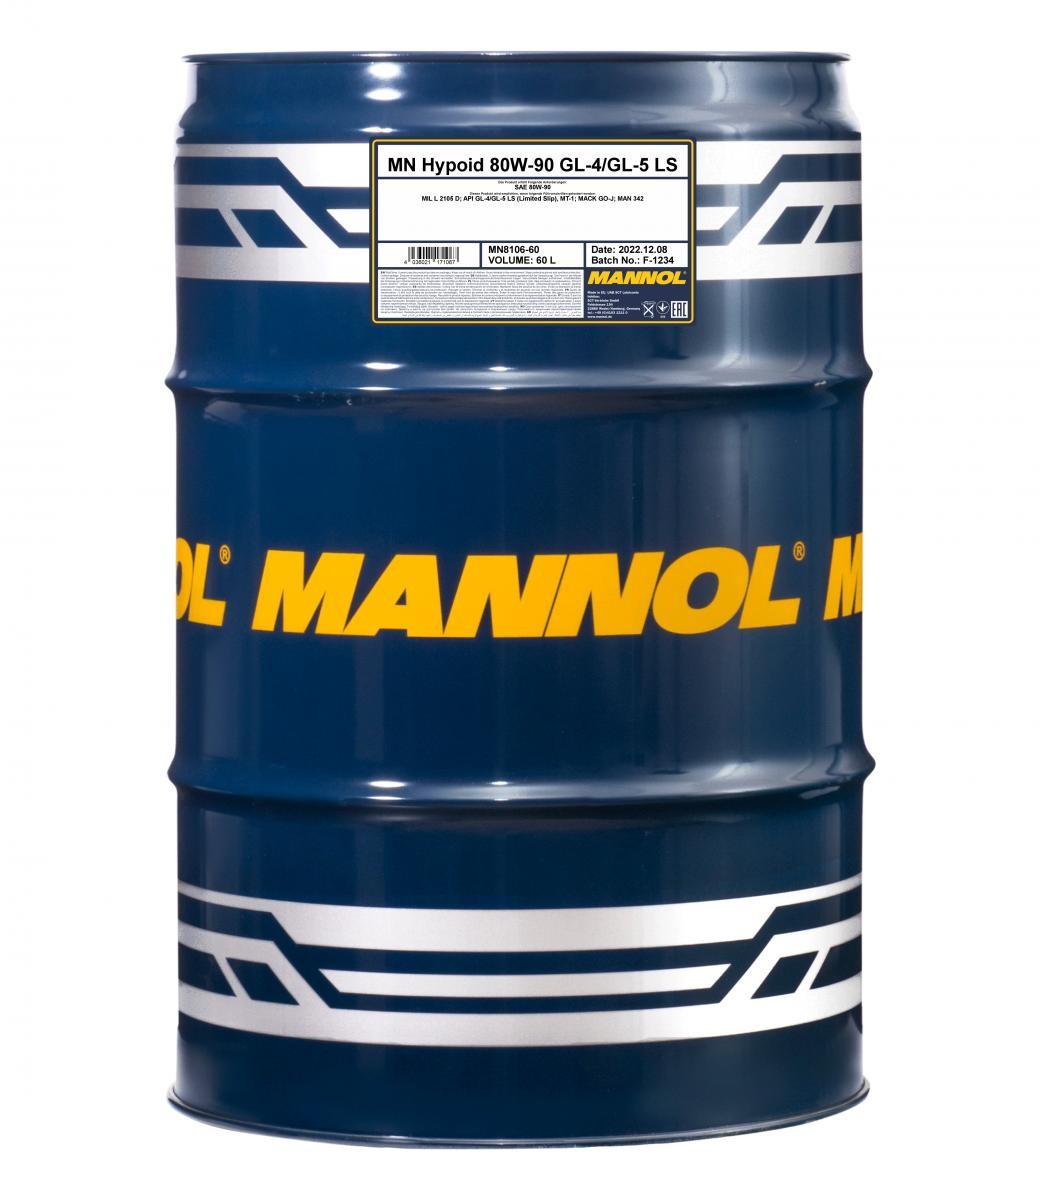 MANNOL Hypoid GL-5 80W-90, Mineral Oil, Capacity: 60l MIL-L 2105 D, MAN 342, MACK GO-J Transmission oil MN8106-60 buy